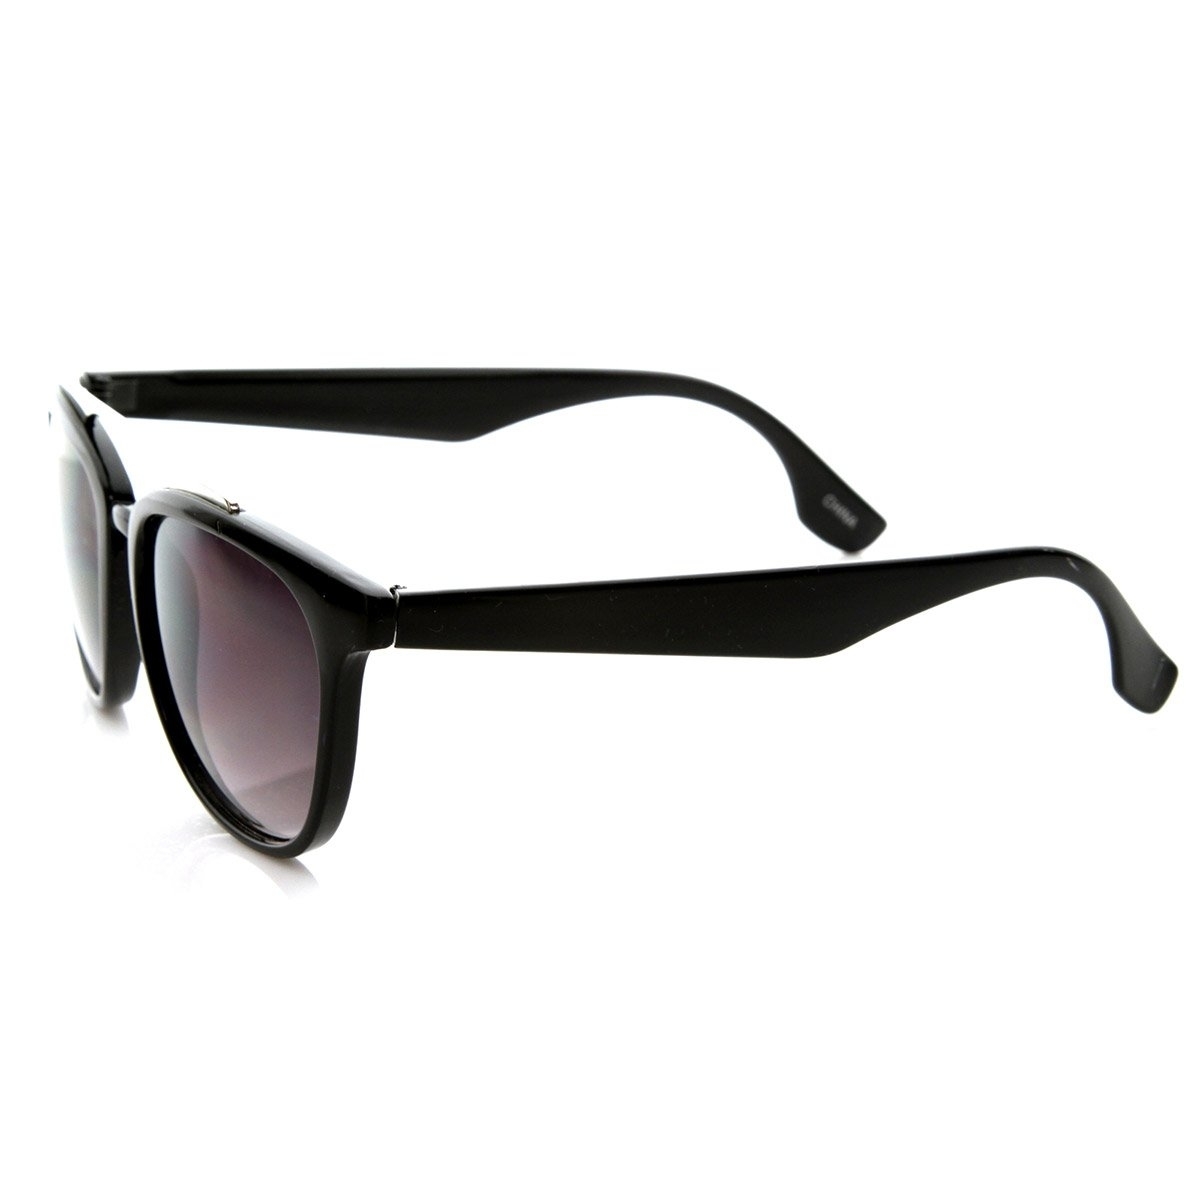 Vintage Inspired Fashion Horn Rimmed Horn Rimmed Sunglasses With Metal Crossbar - Black Smoke-Lens